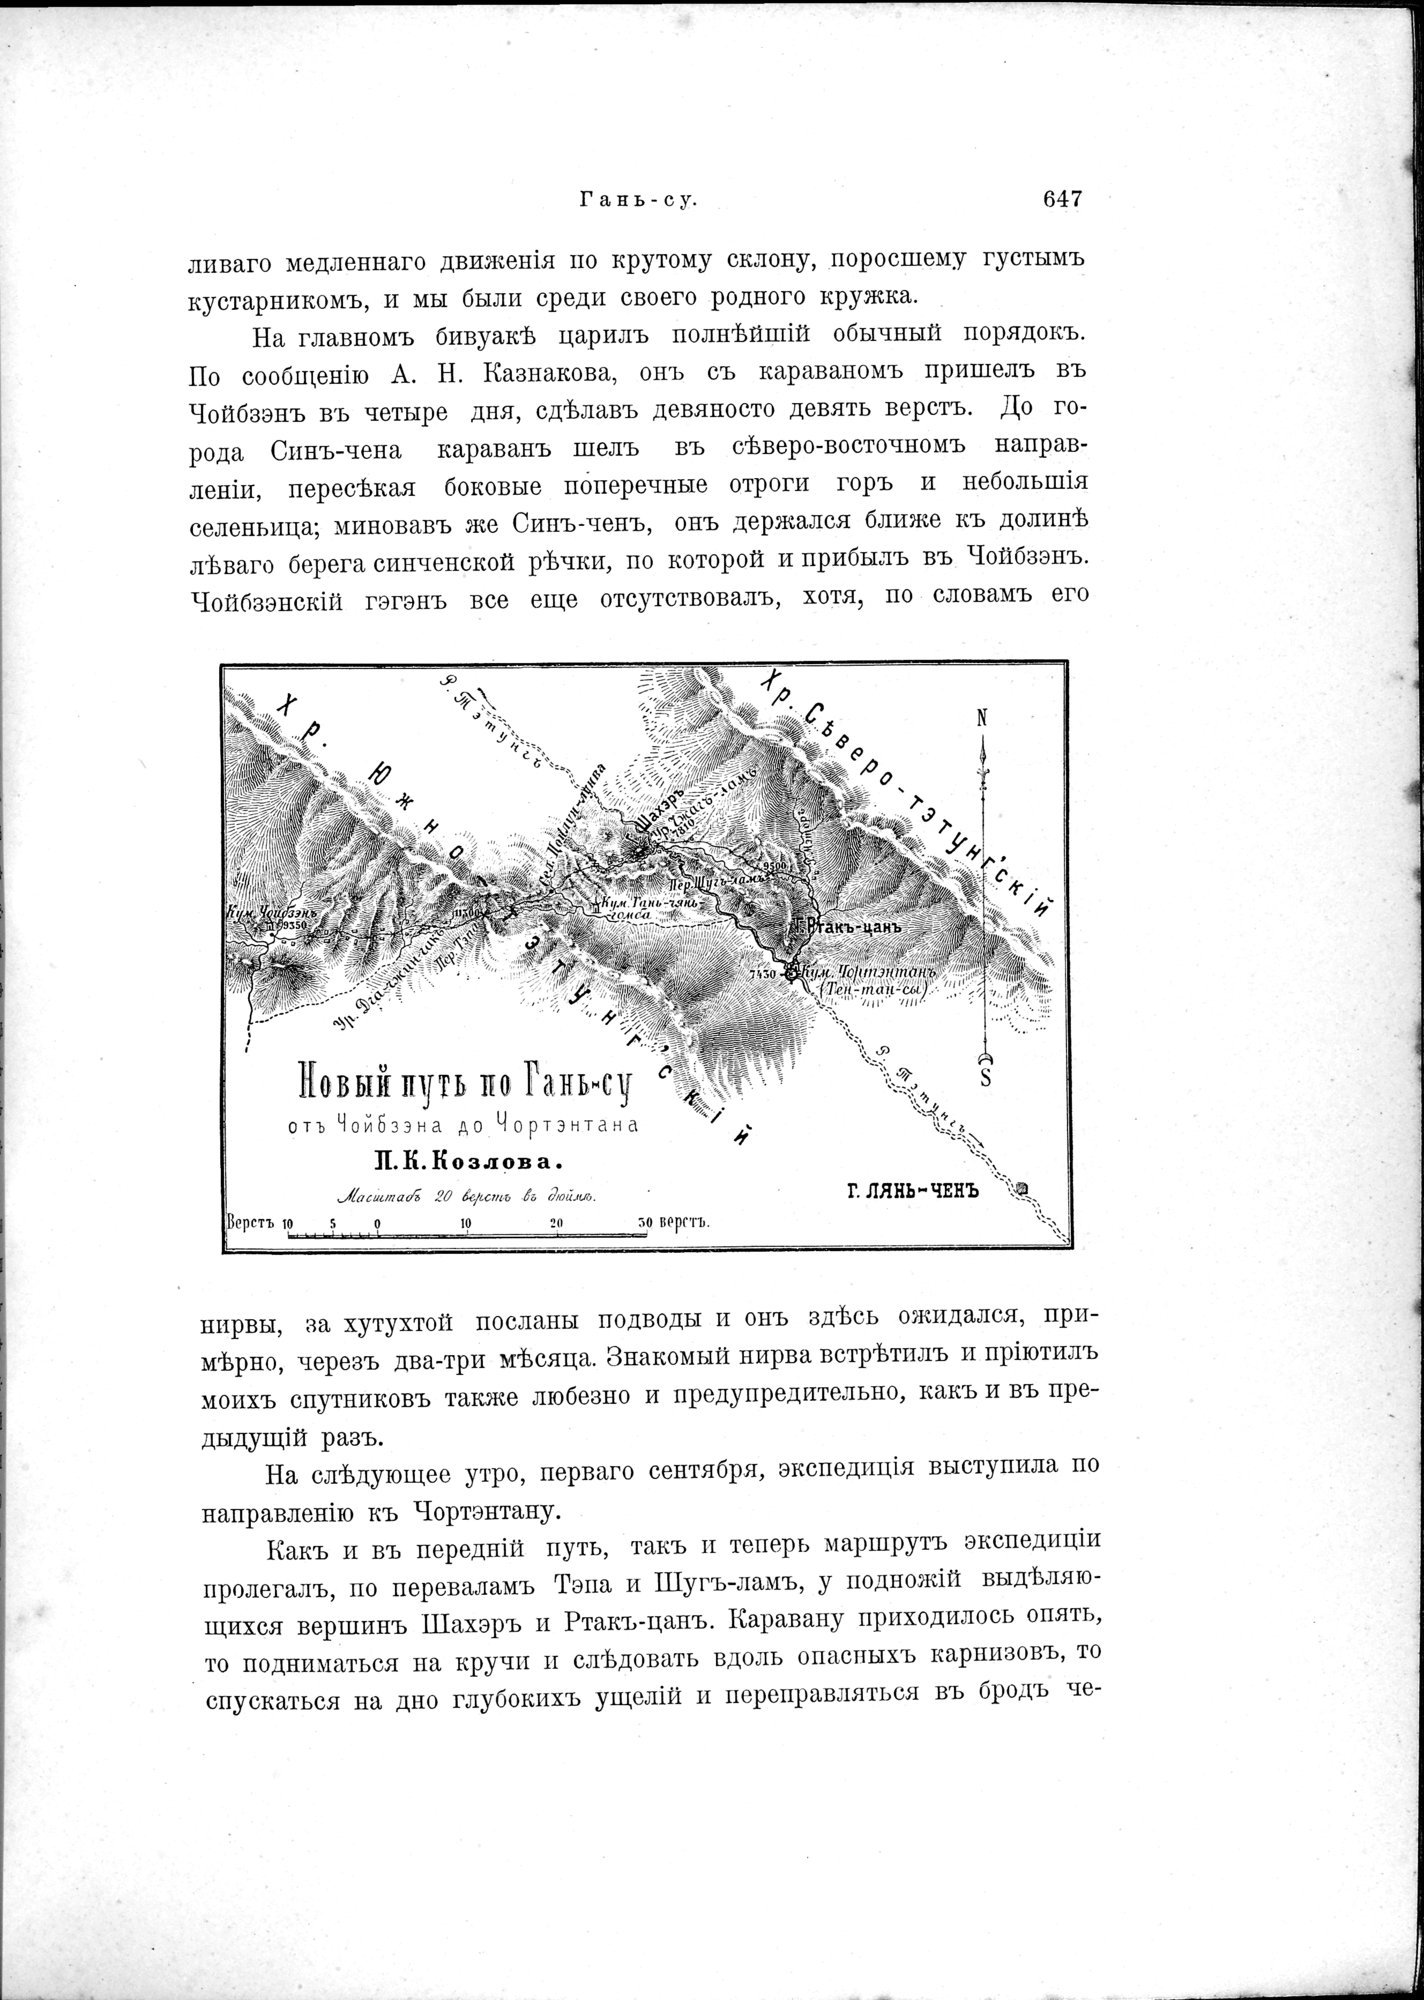 Mongoliia i Kam : vol.2 / Page 477 (Grayscale High Resolution Image)